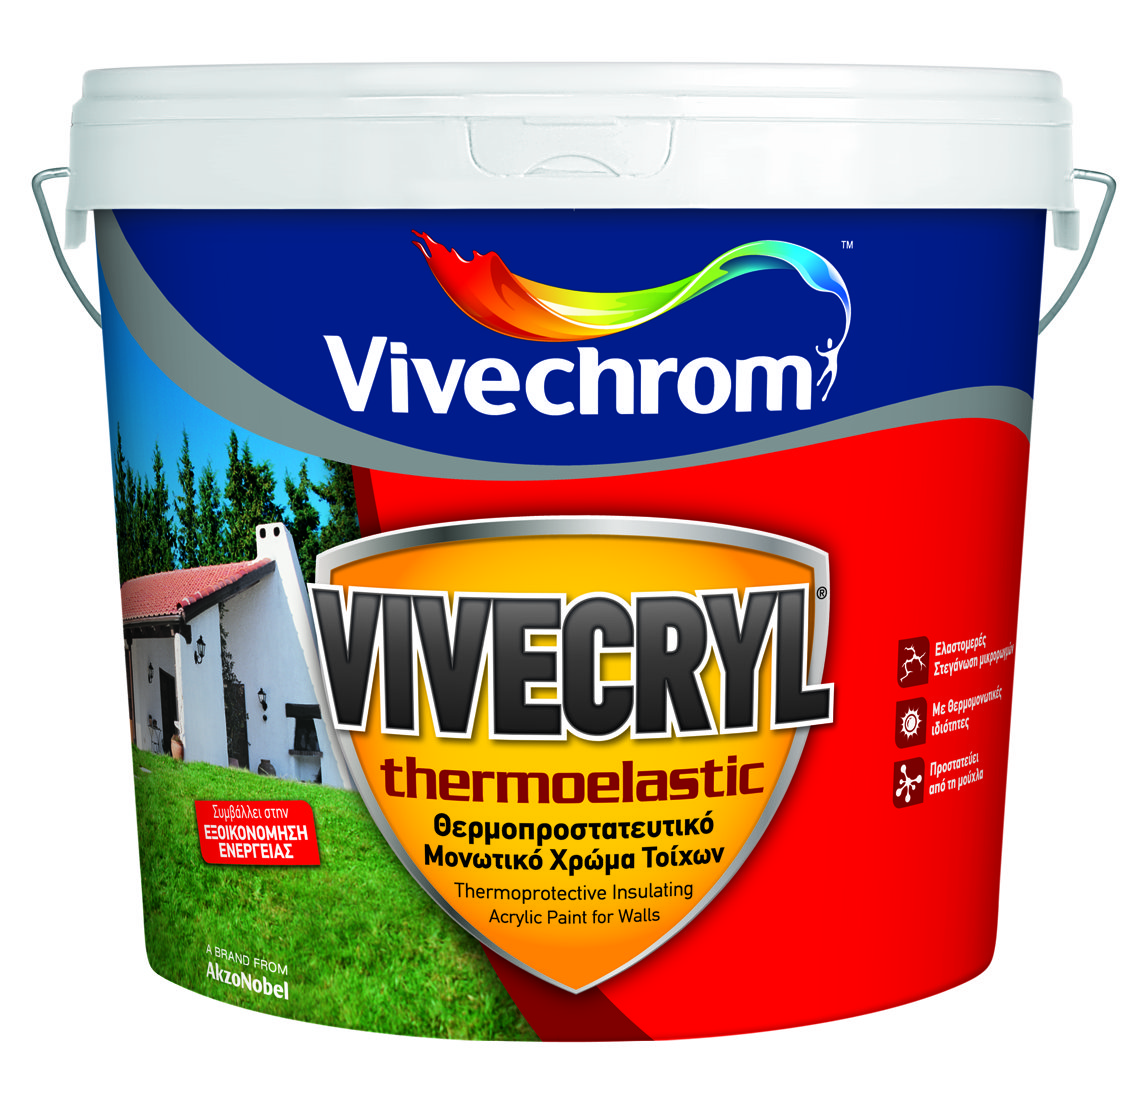 Vivechrom Vivecry Θερμοπροστατευτικό Οικολογικό Ακρυλική Βάση Matt Finish Mixing P 3L